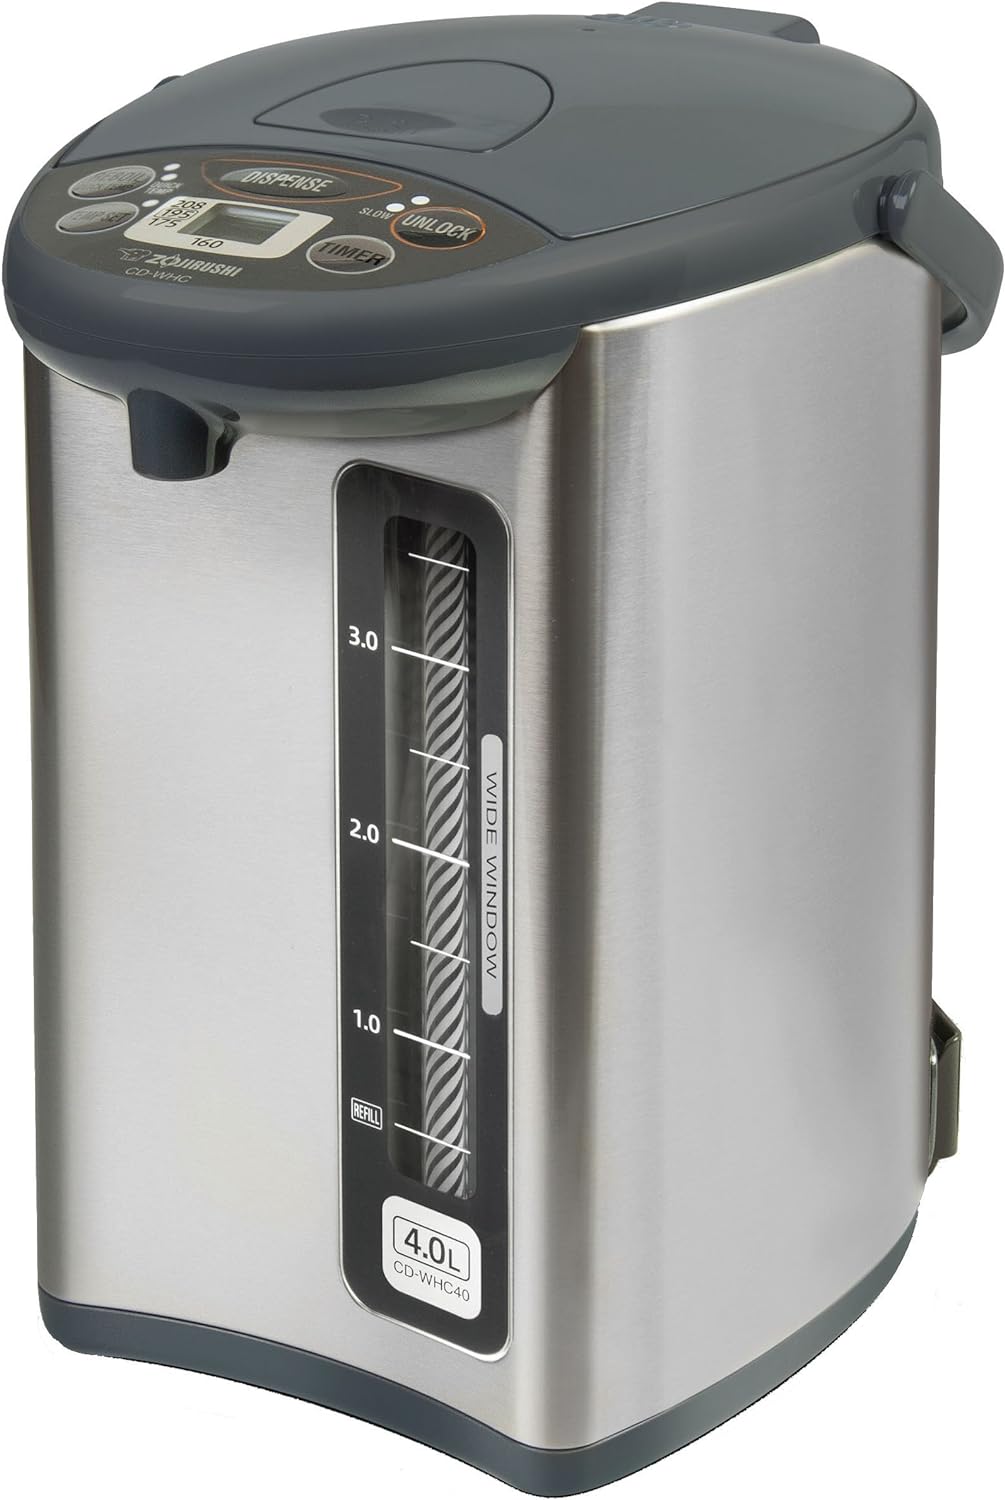 Chefman Electric Hot Water Pot Urn w/ Auto & Manual 5.3 Liter